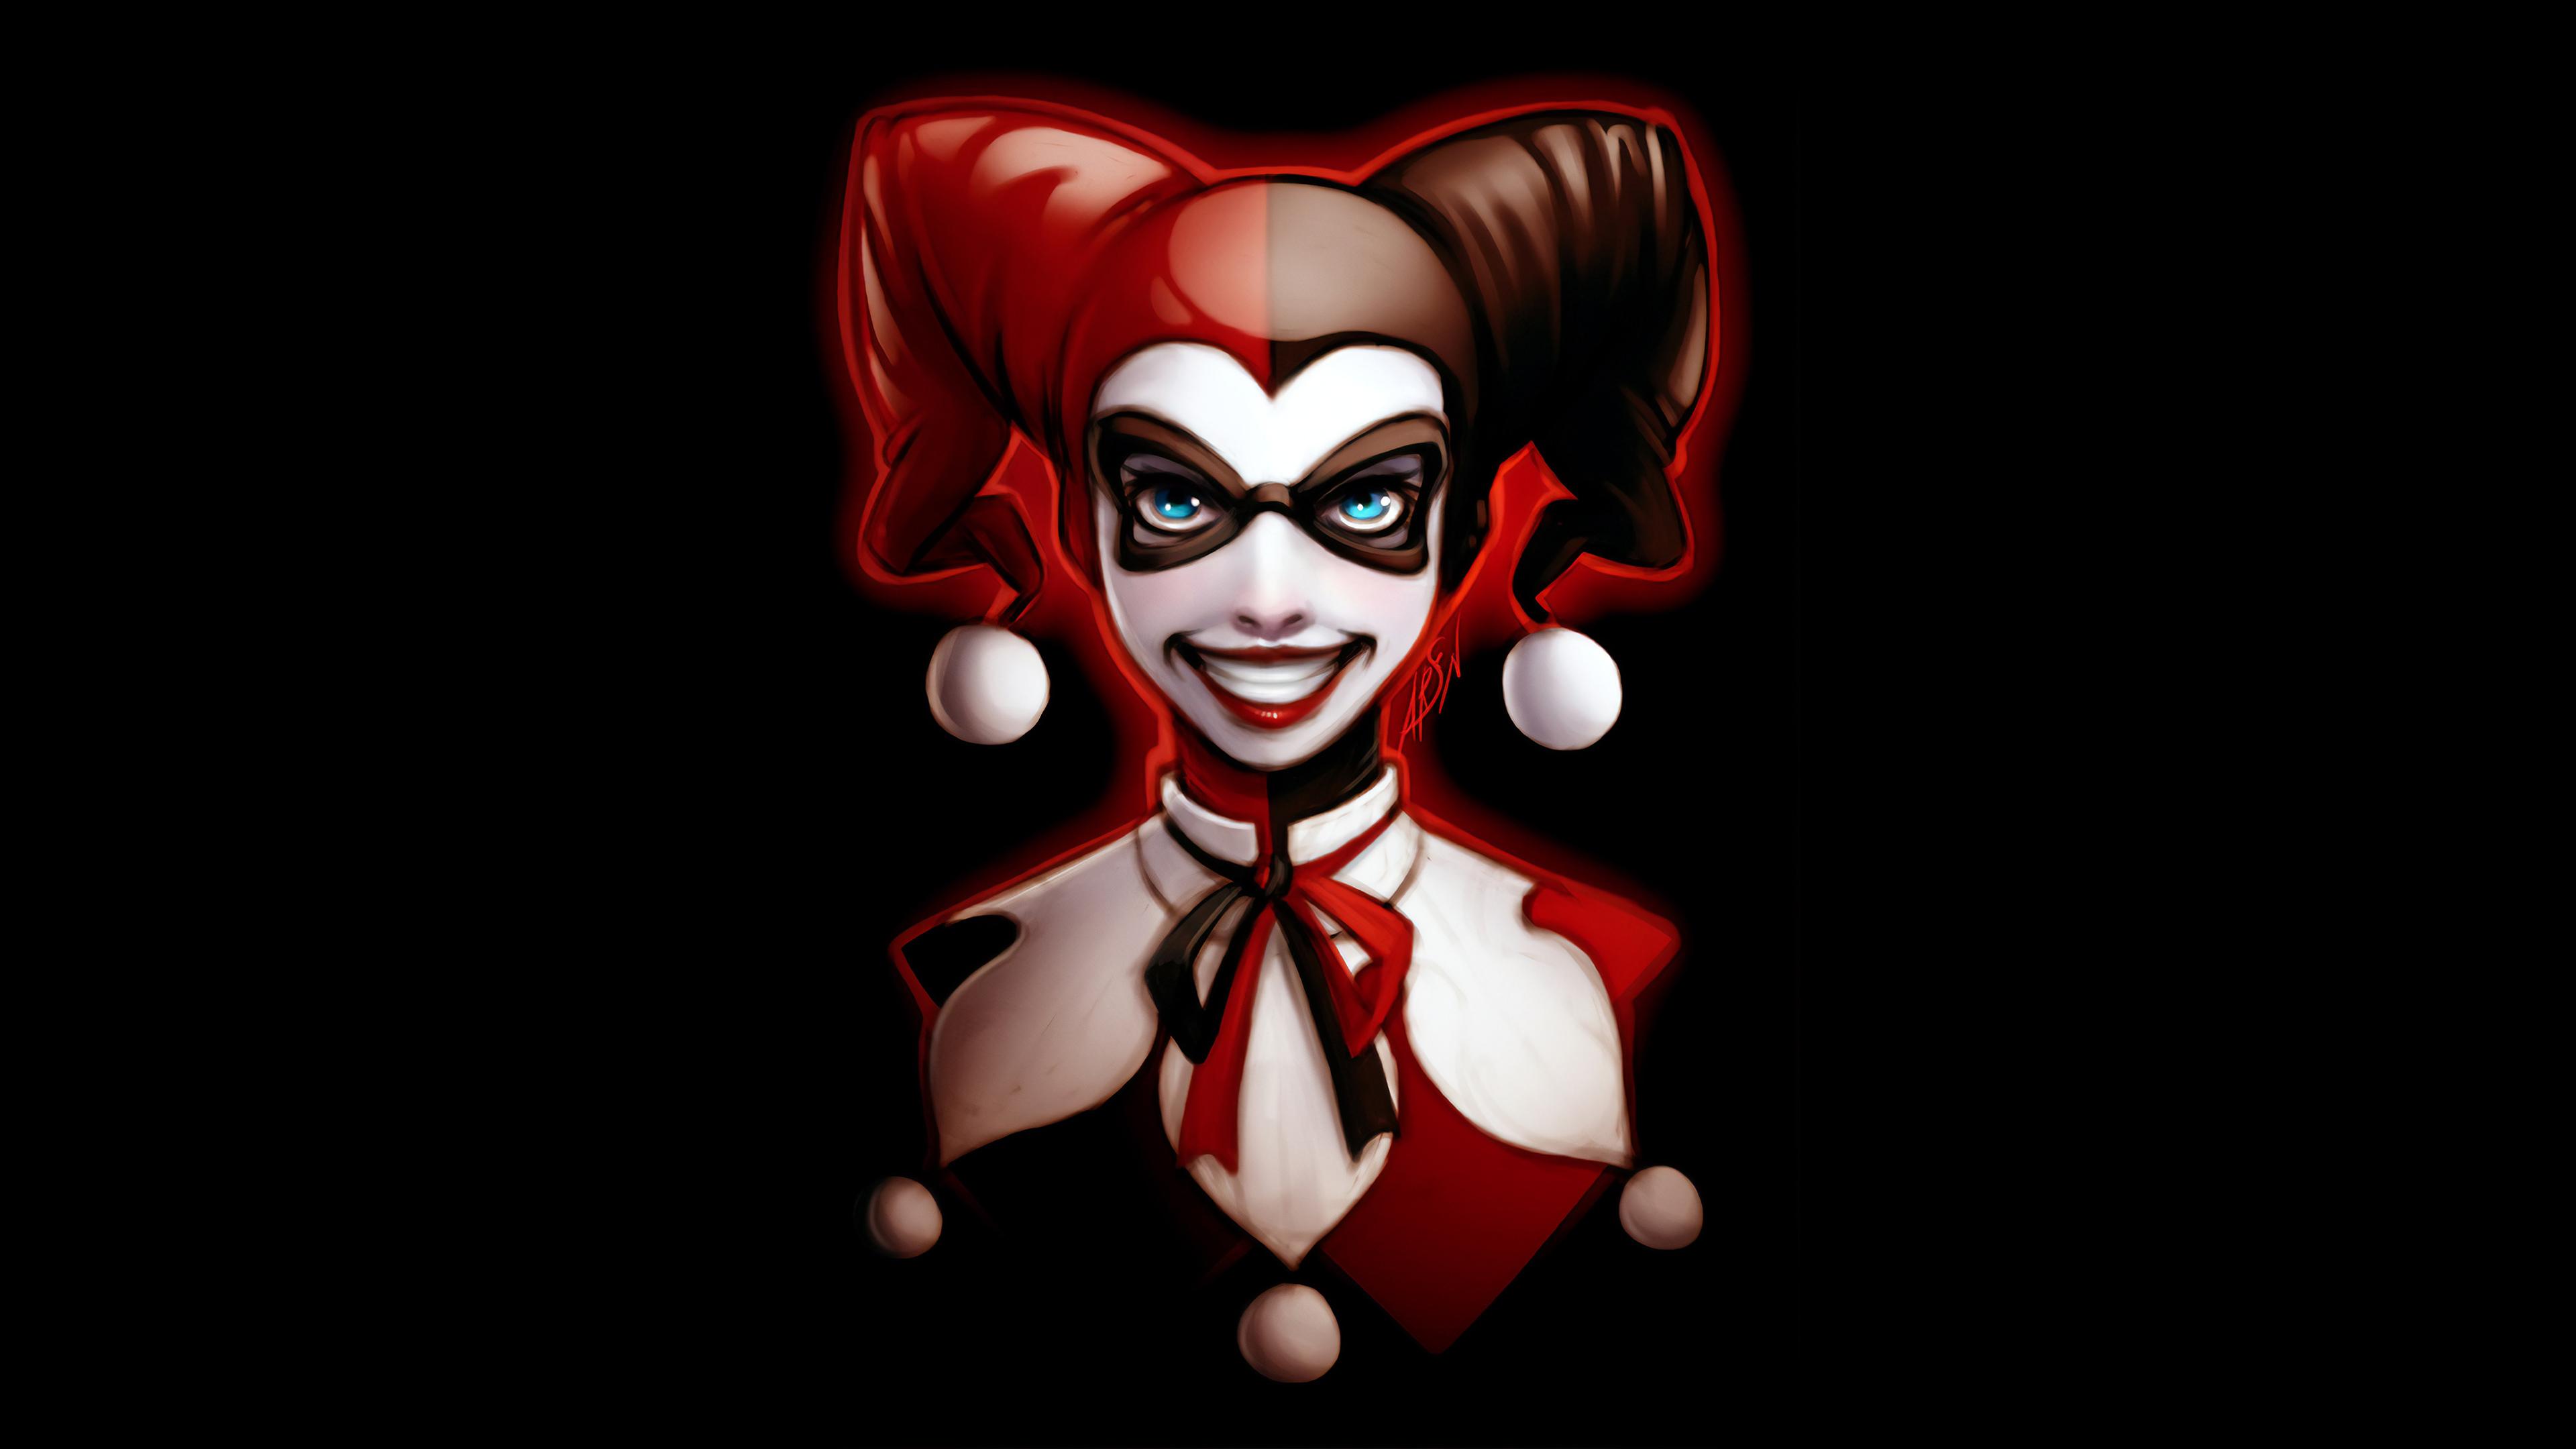 Harley Quinn 4k Ultra HD Wallpaper. Background Image